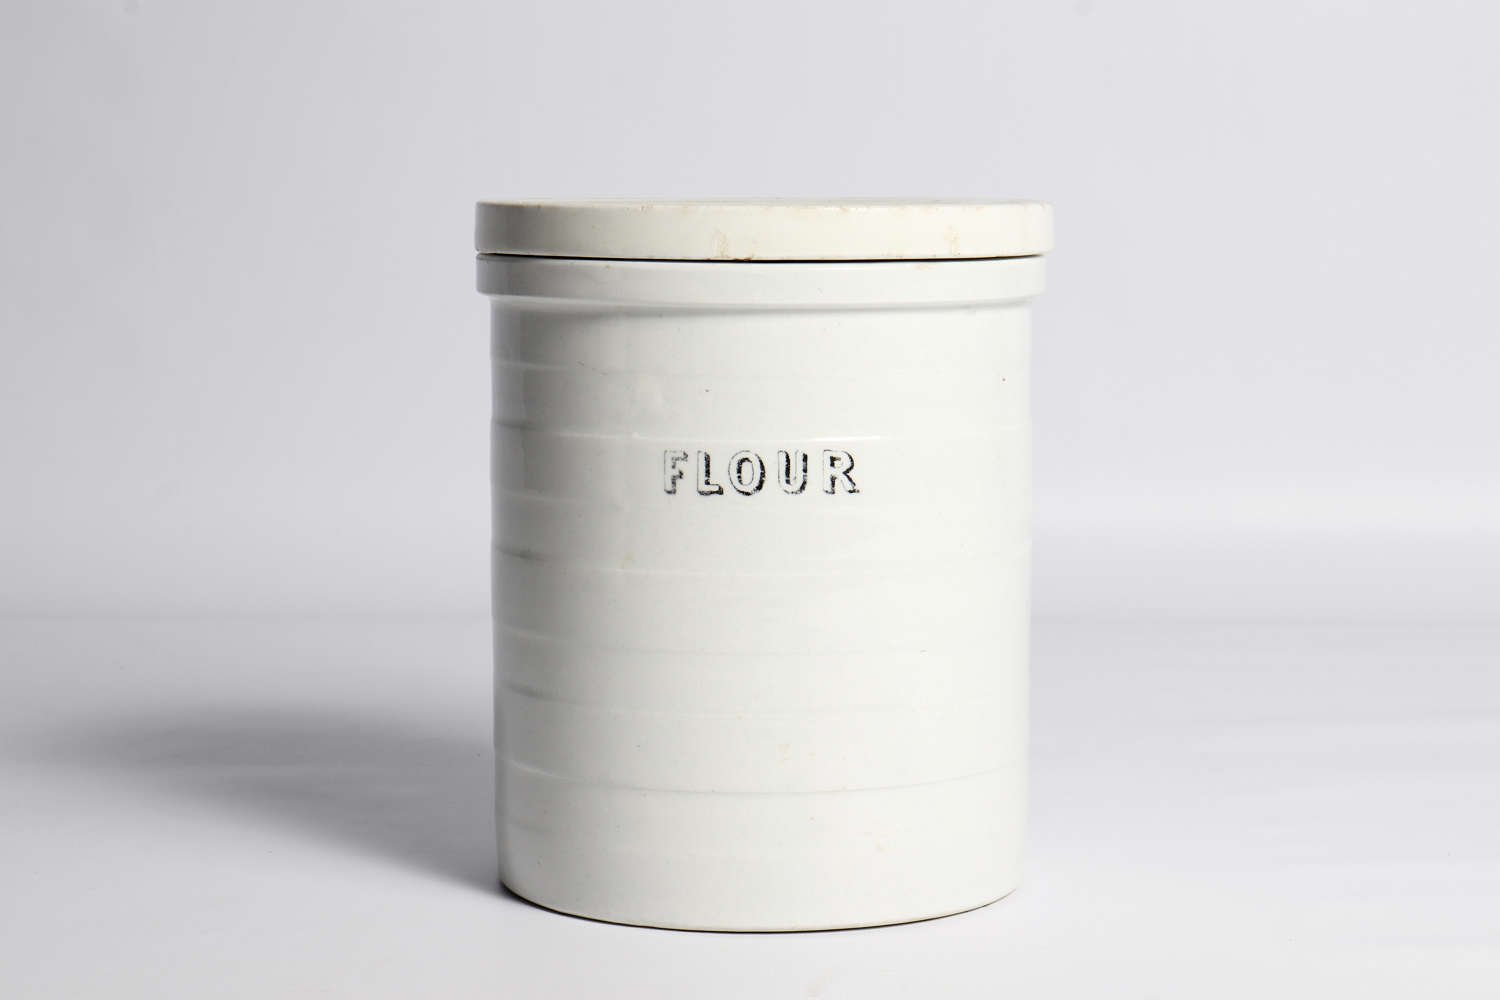 White banded storage jar - 'Flour'